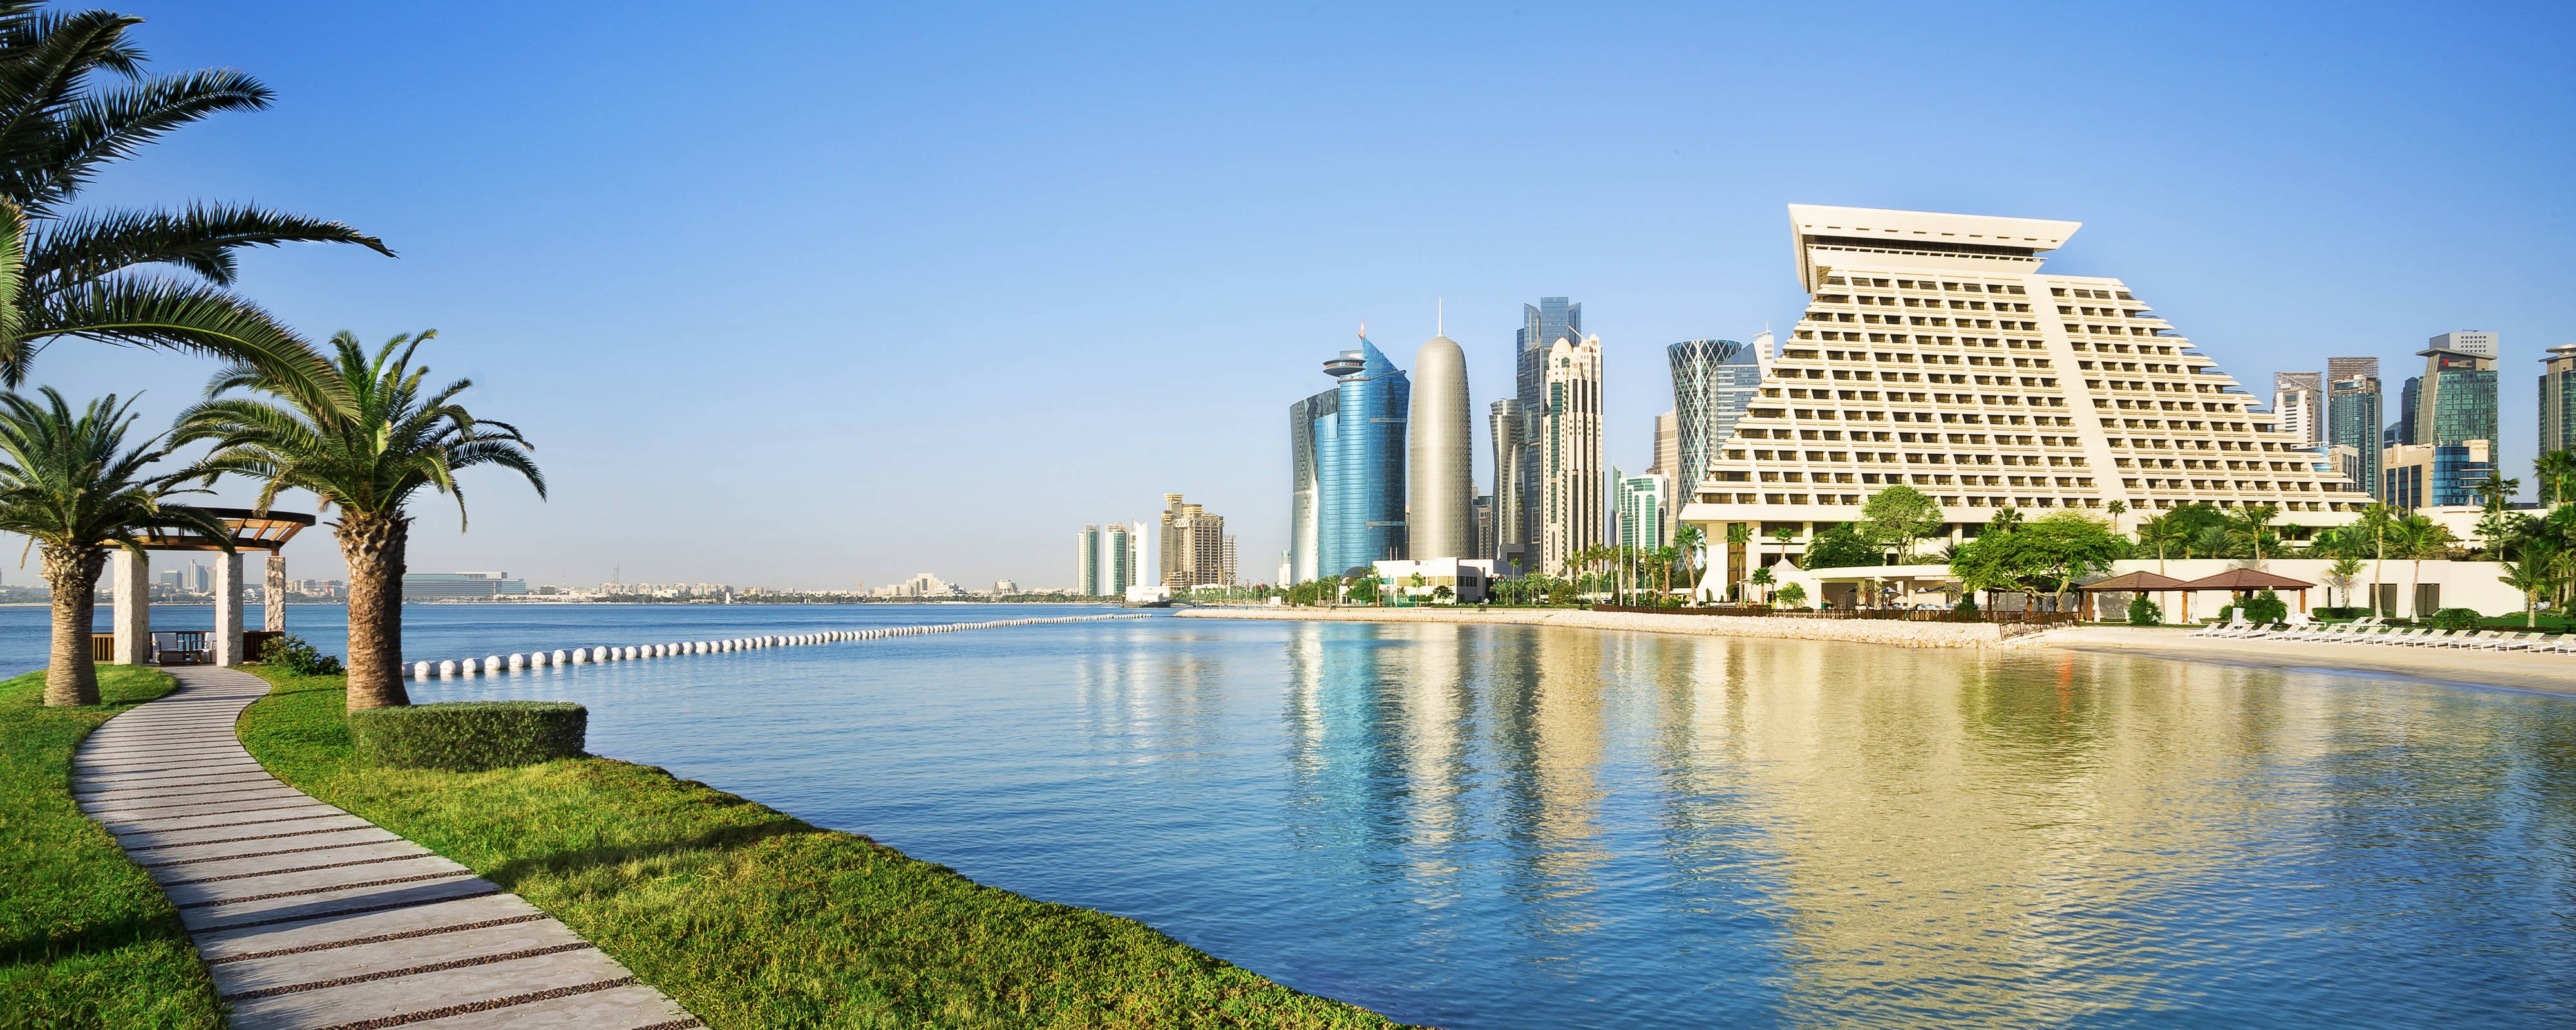 Hotels in Doha | Sheraton Grand Doha Resort & Convention Hotel